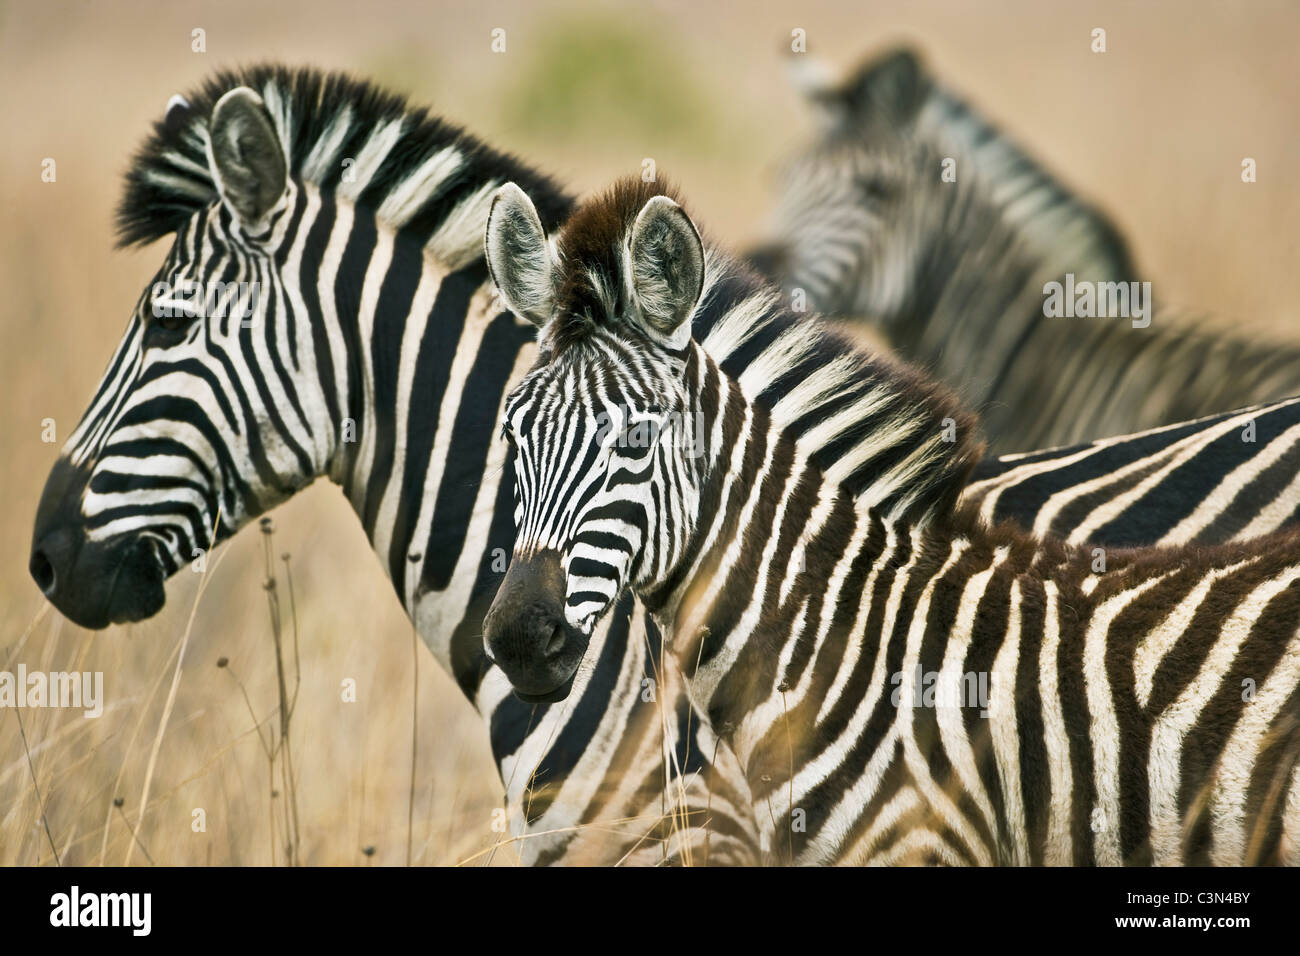 South Africa, near Rustenburg, Pilanesberg National Park. Three Burchell's Zebras, Equus burchelli. Stock Photo